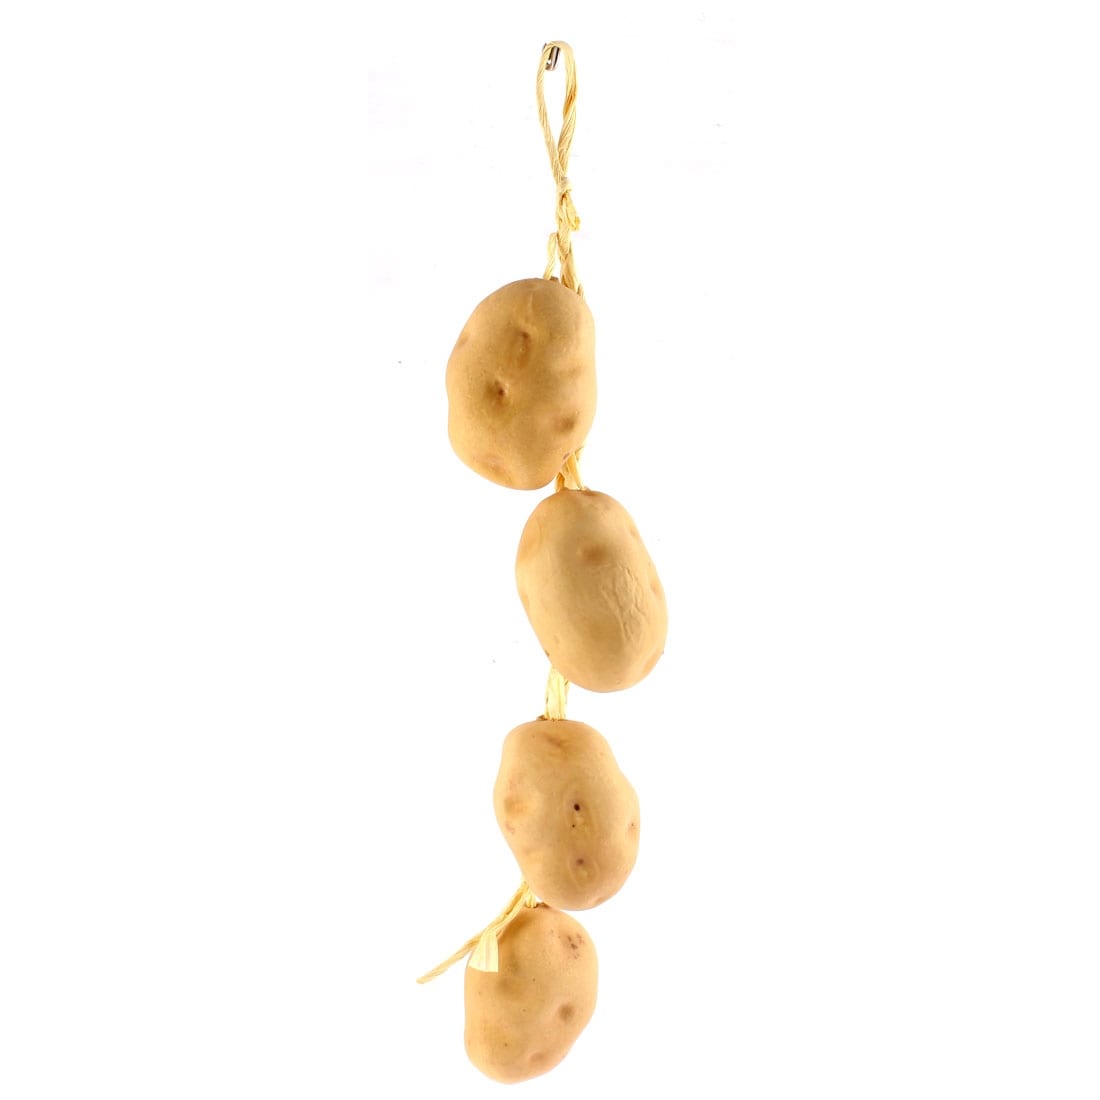 Artificial-Hanging-Potato-String-Decorative-Fake-Vegetable.jpg